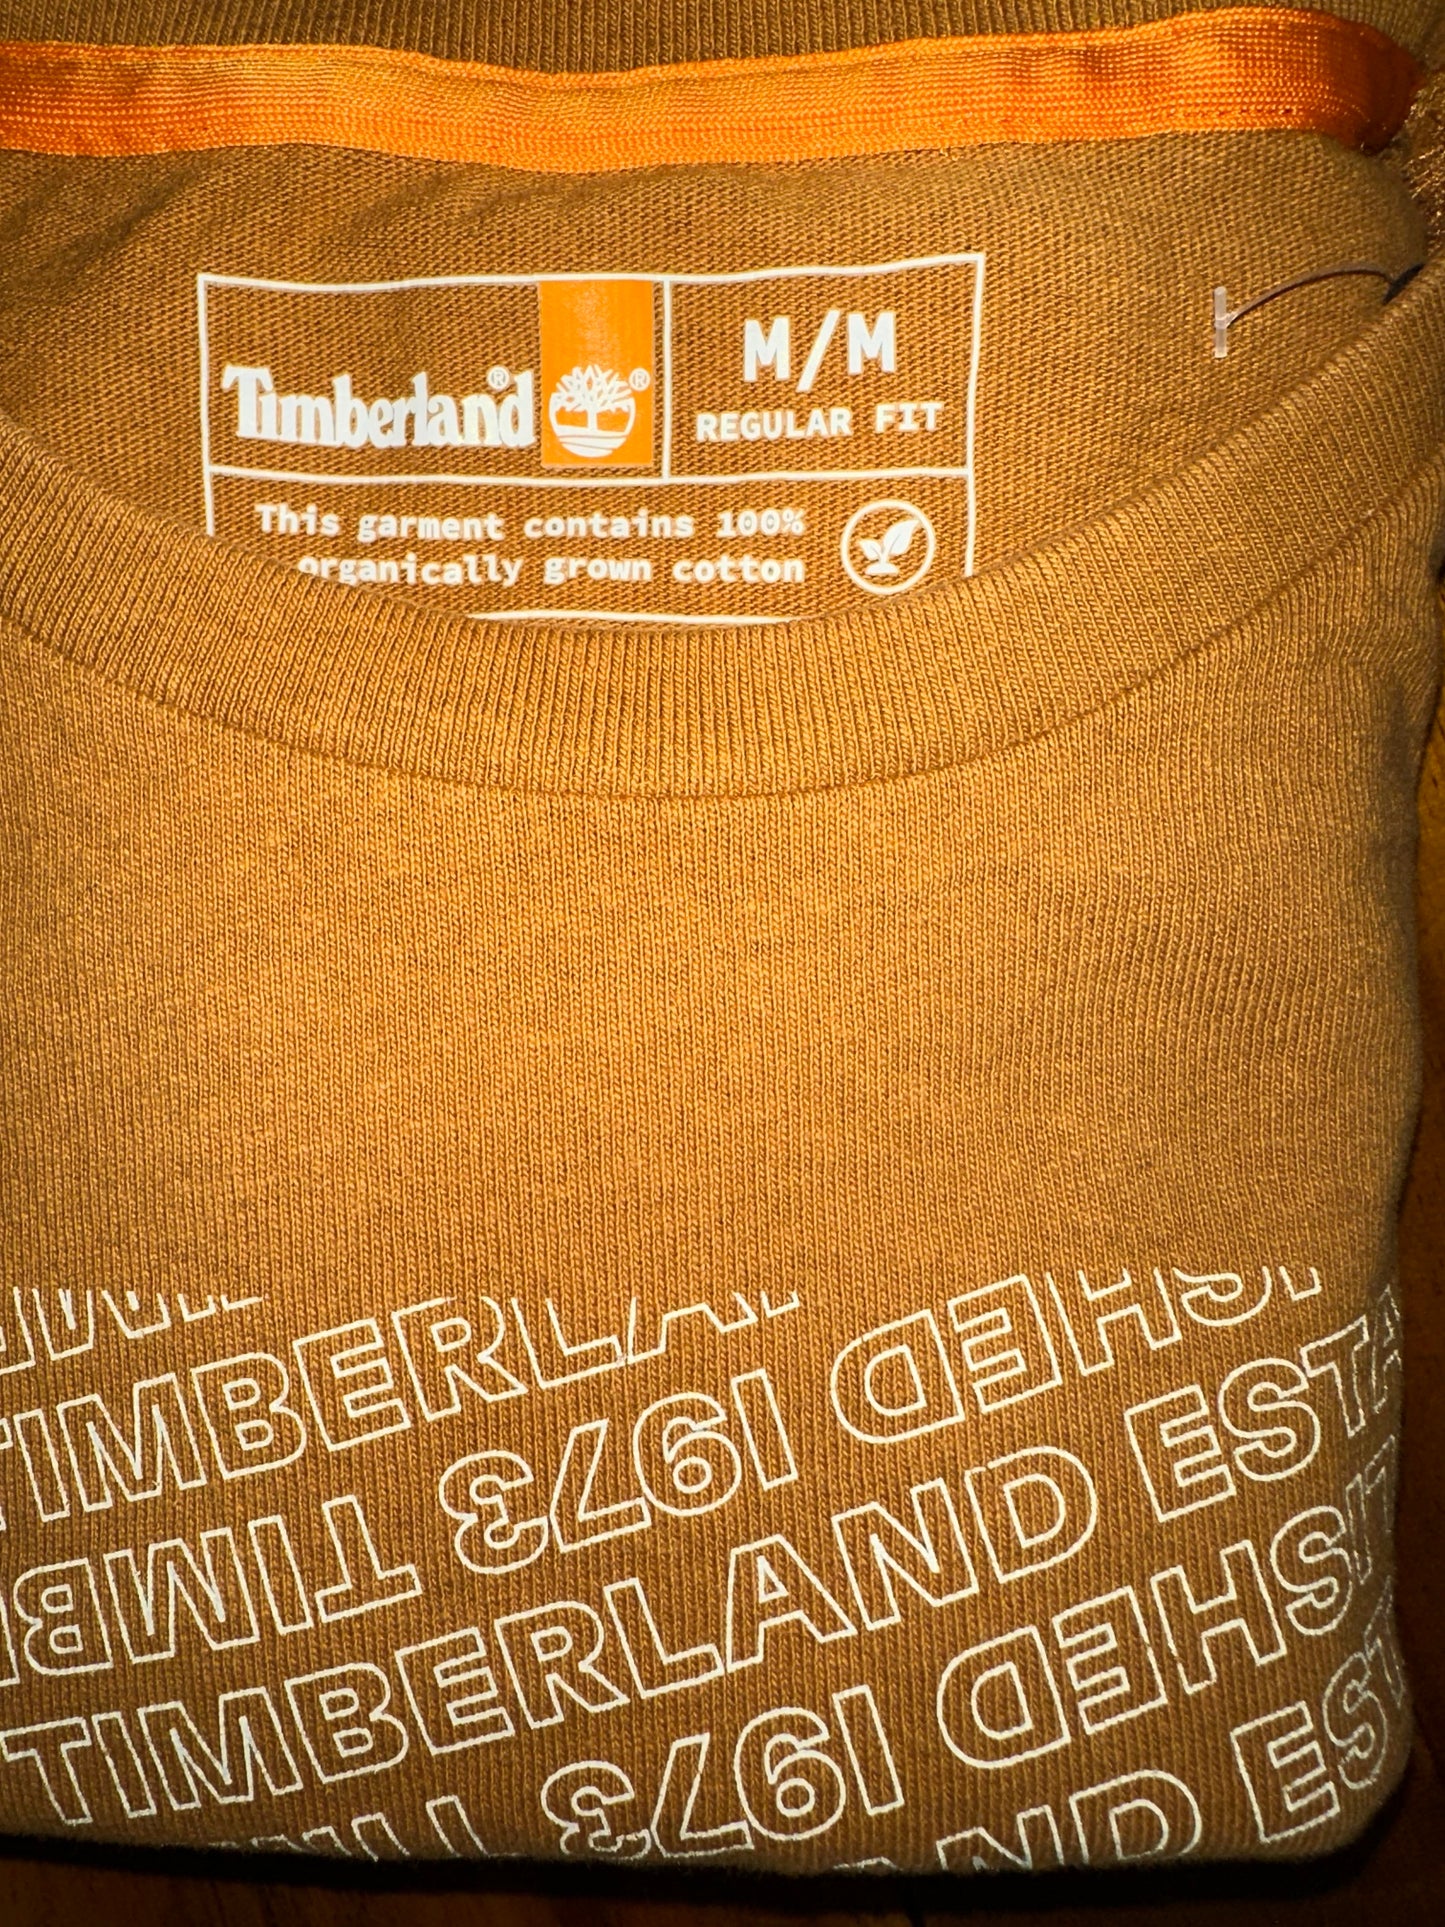 (NWOT) Timberland - Orange T-shirt